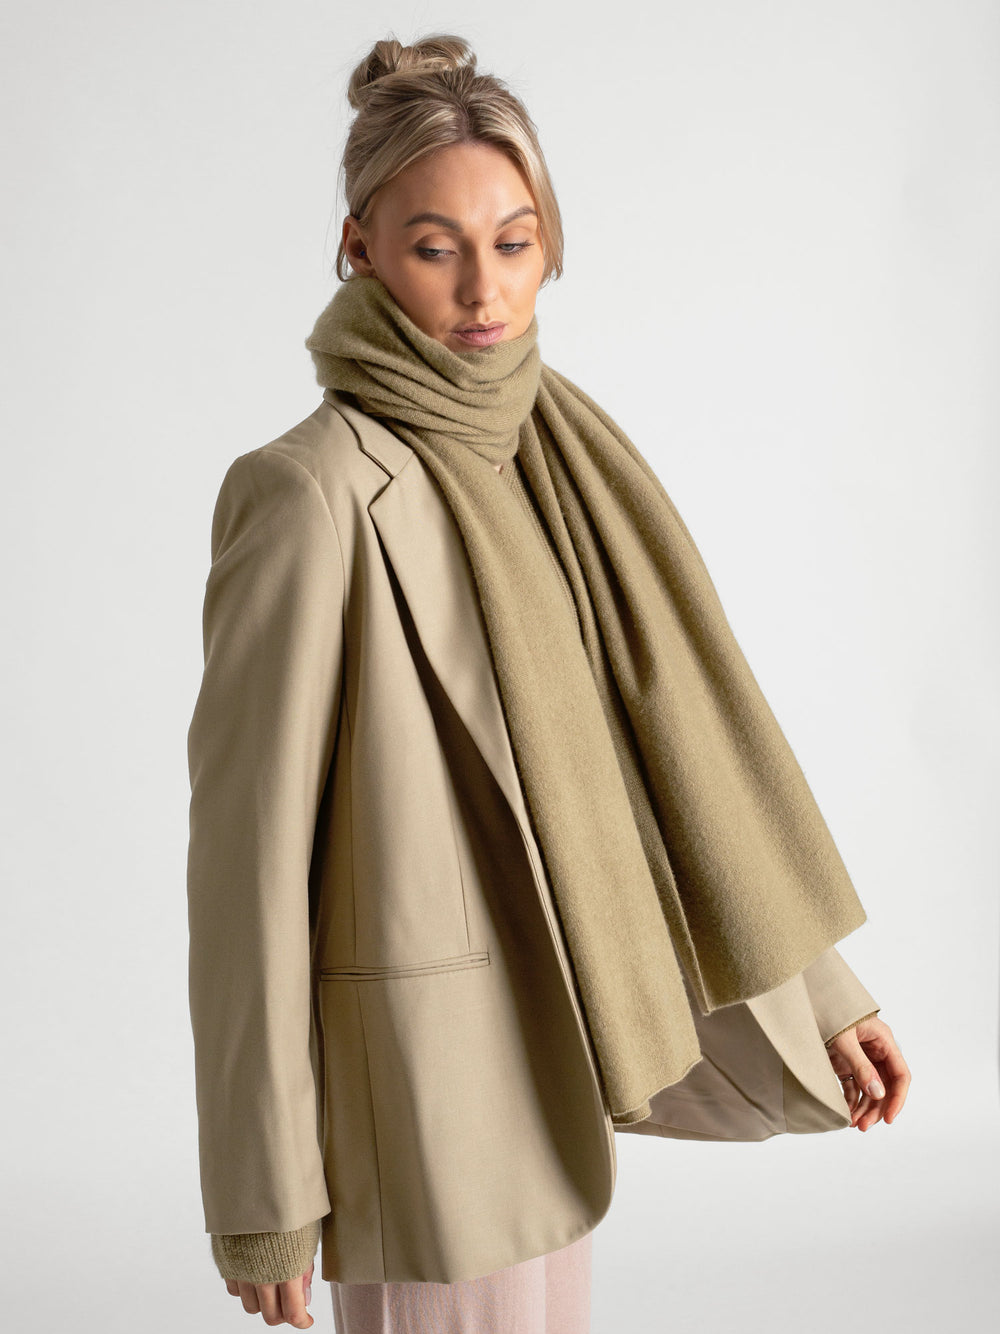 Cashmere scarf "Signature" in 100% cashmere. Color: Olive. Scandinavian design by Kashmina